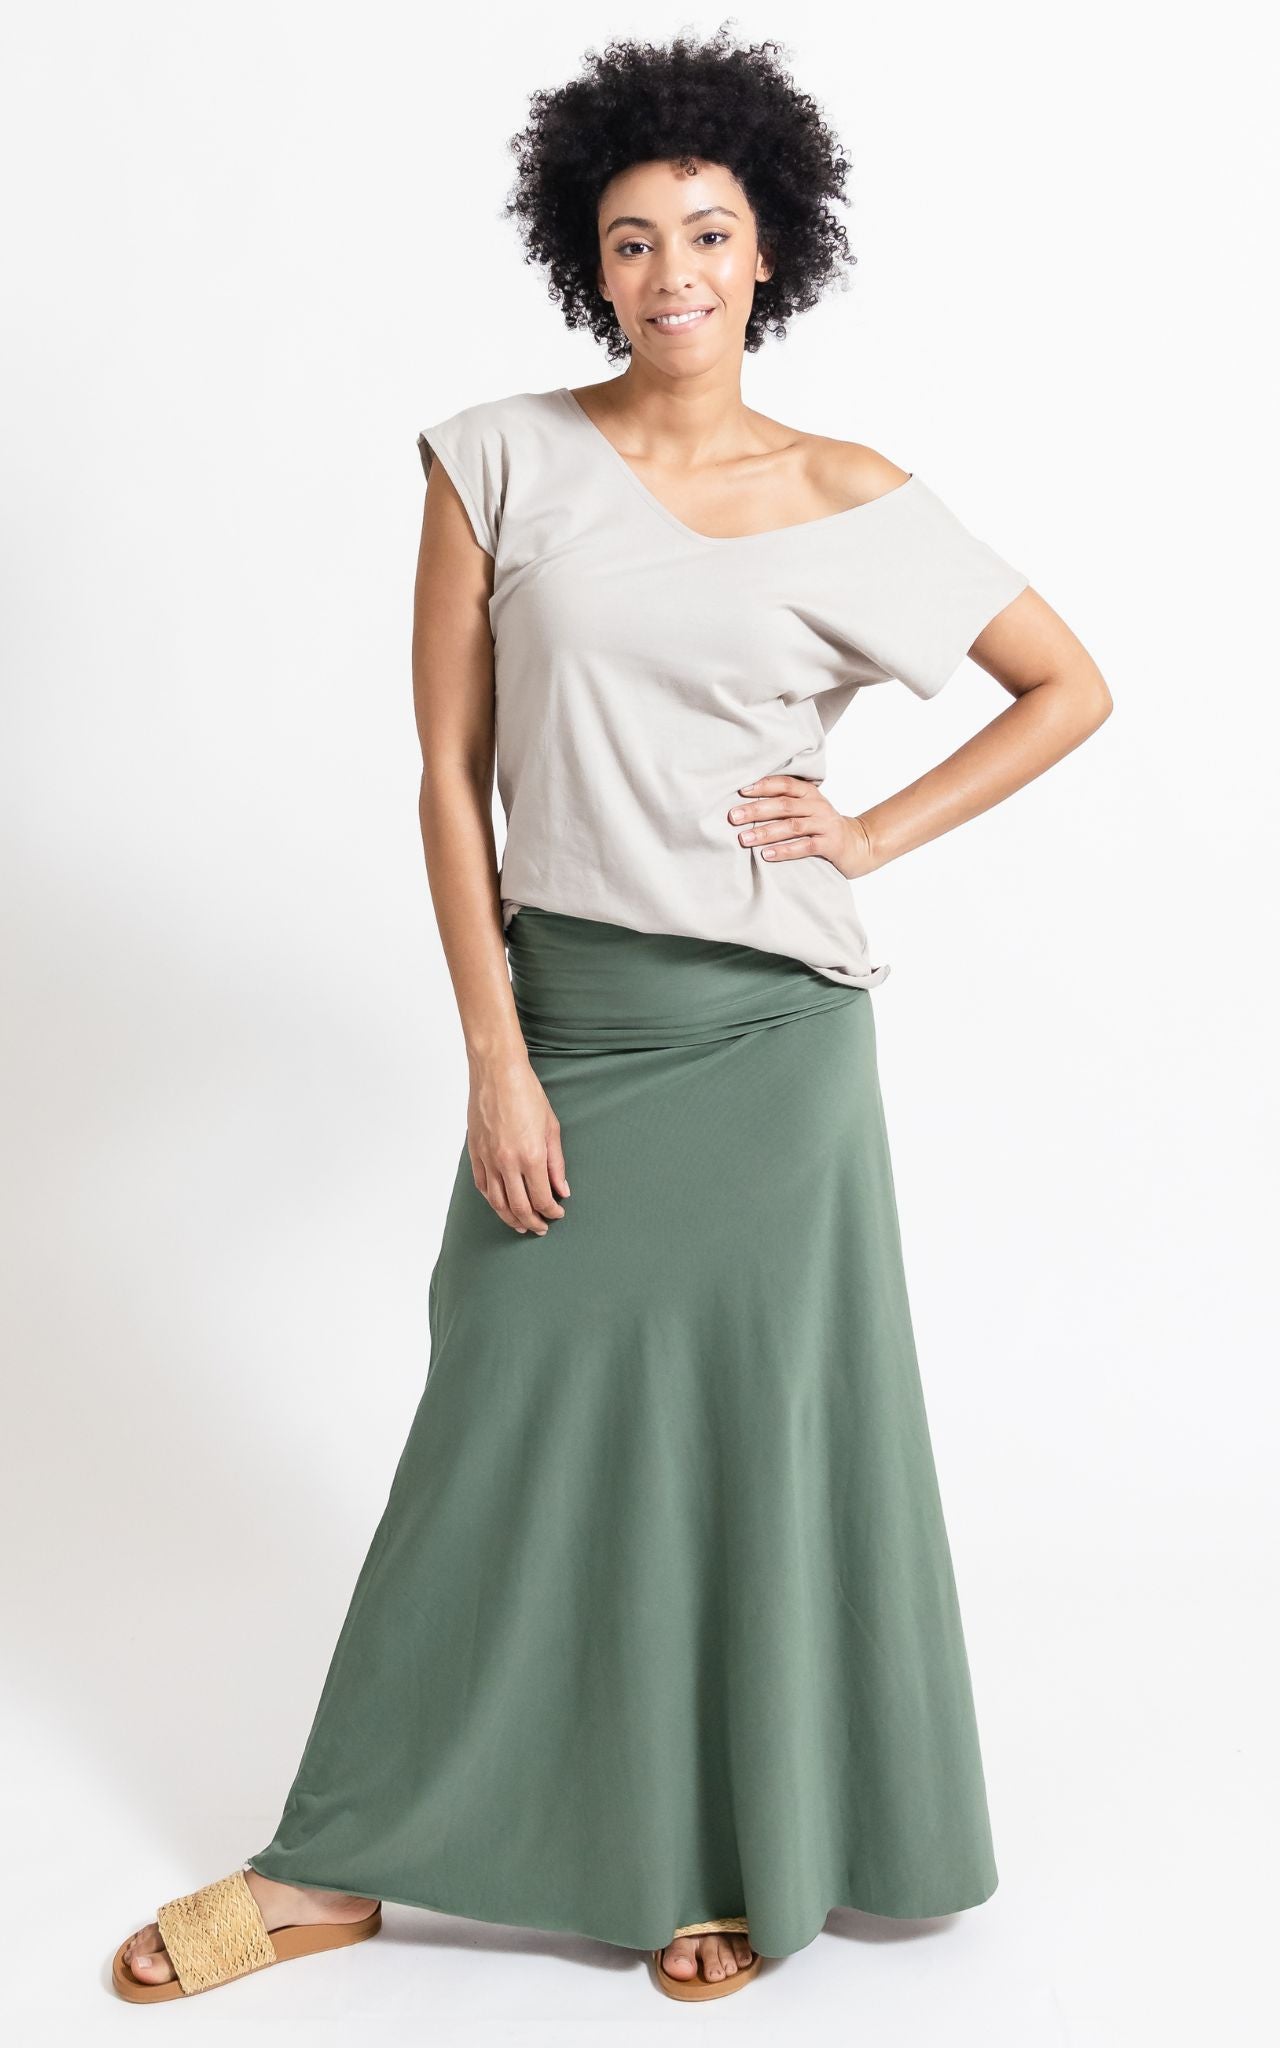 Surya Australia Organic Cotton 'Sonder' Skirt made in Nepal - Ocean